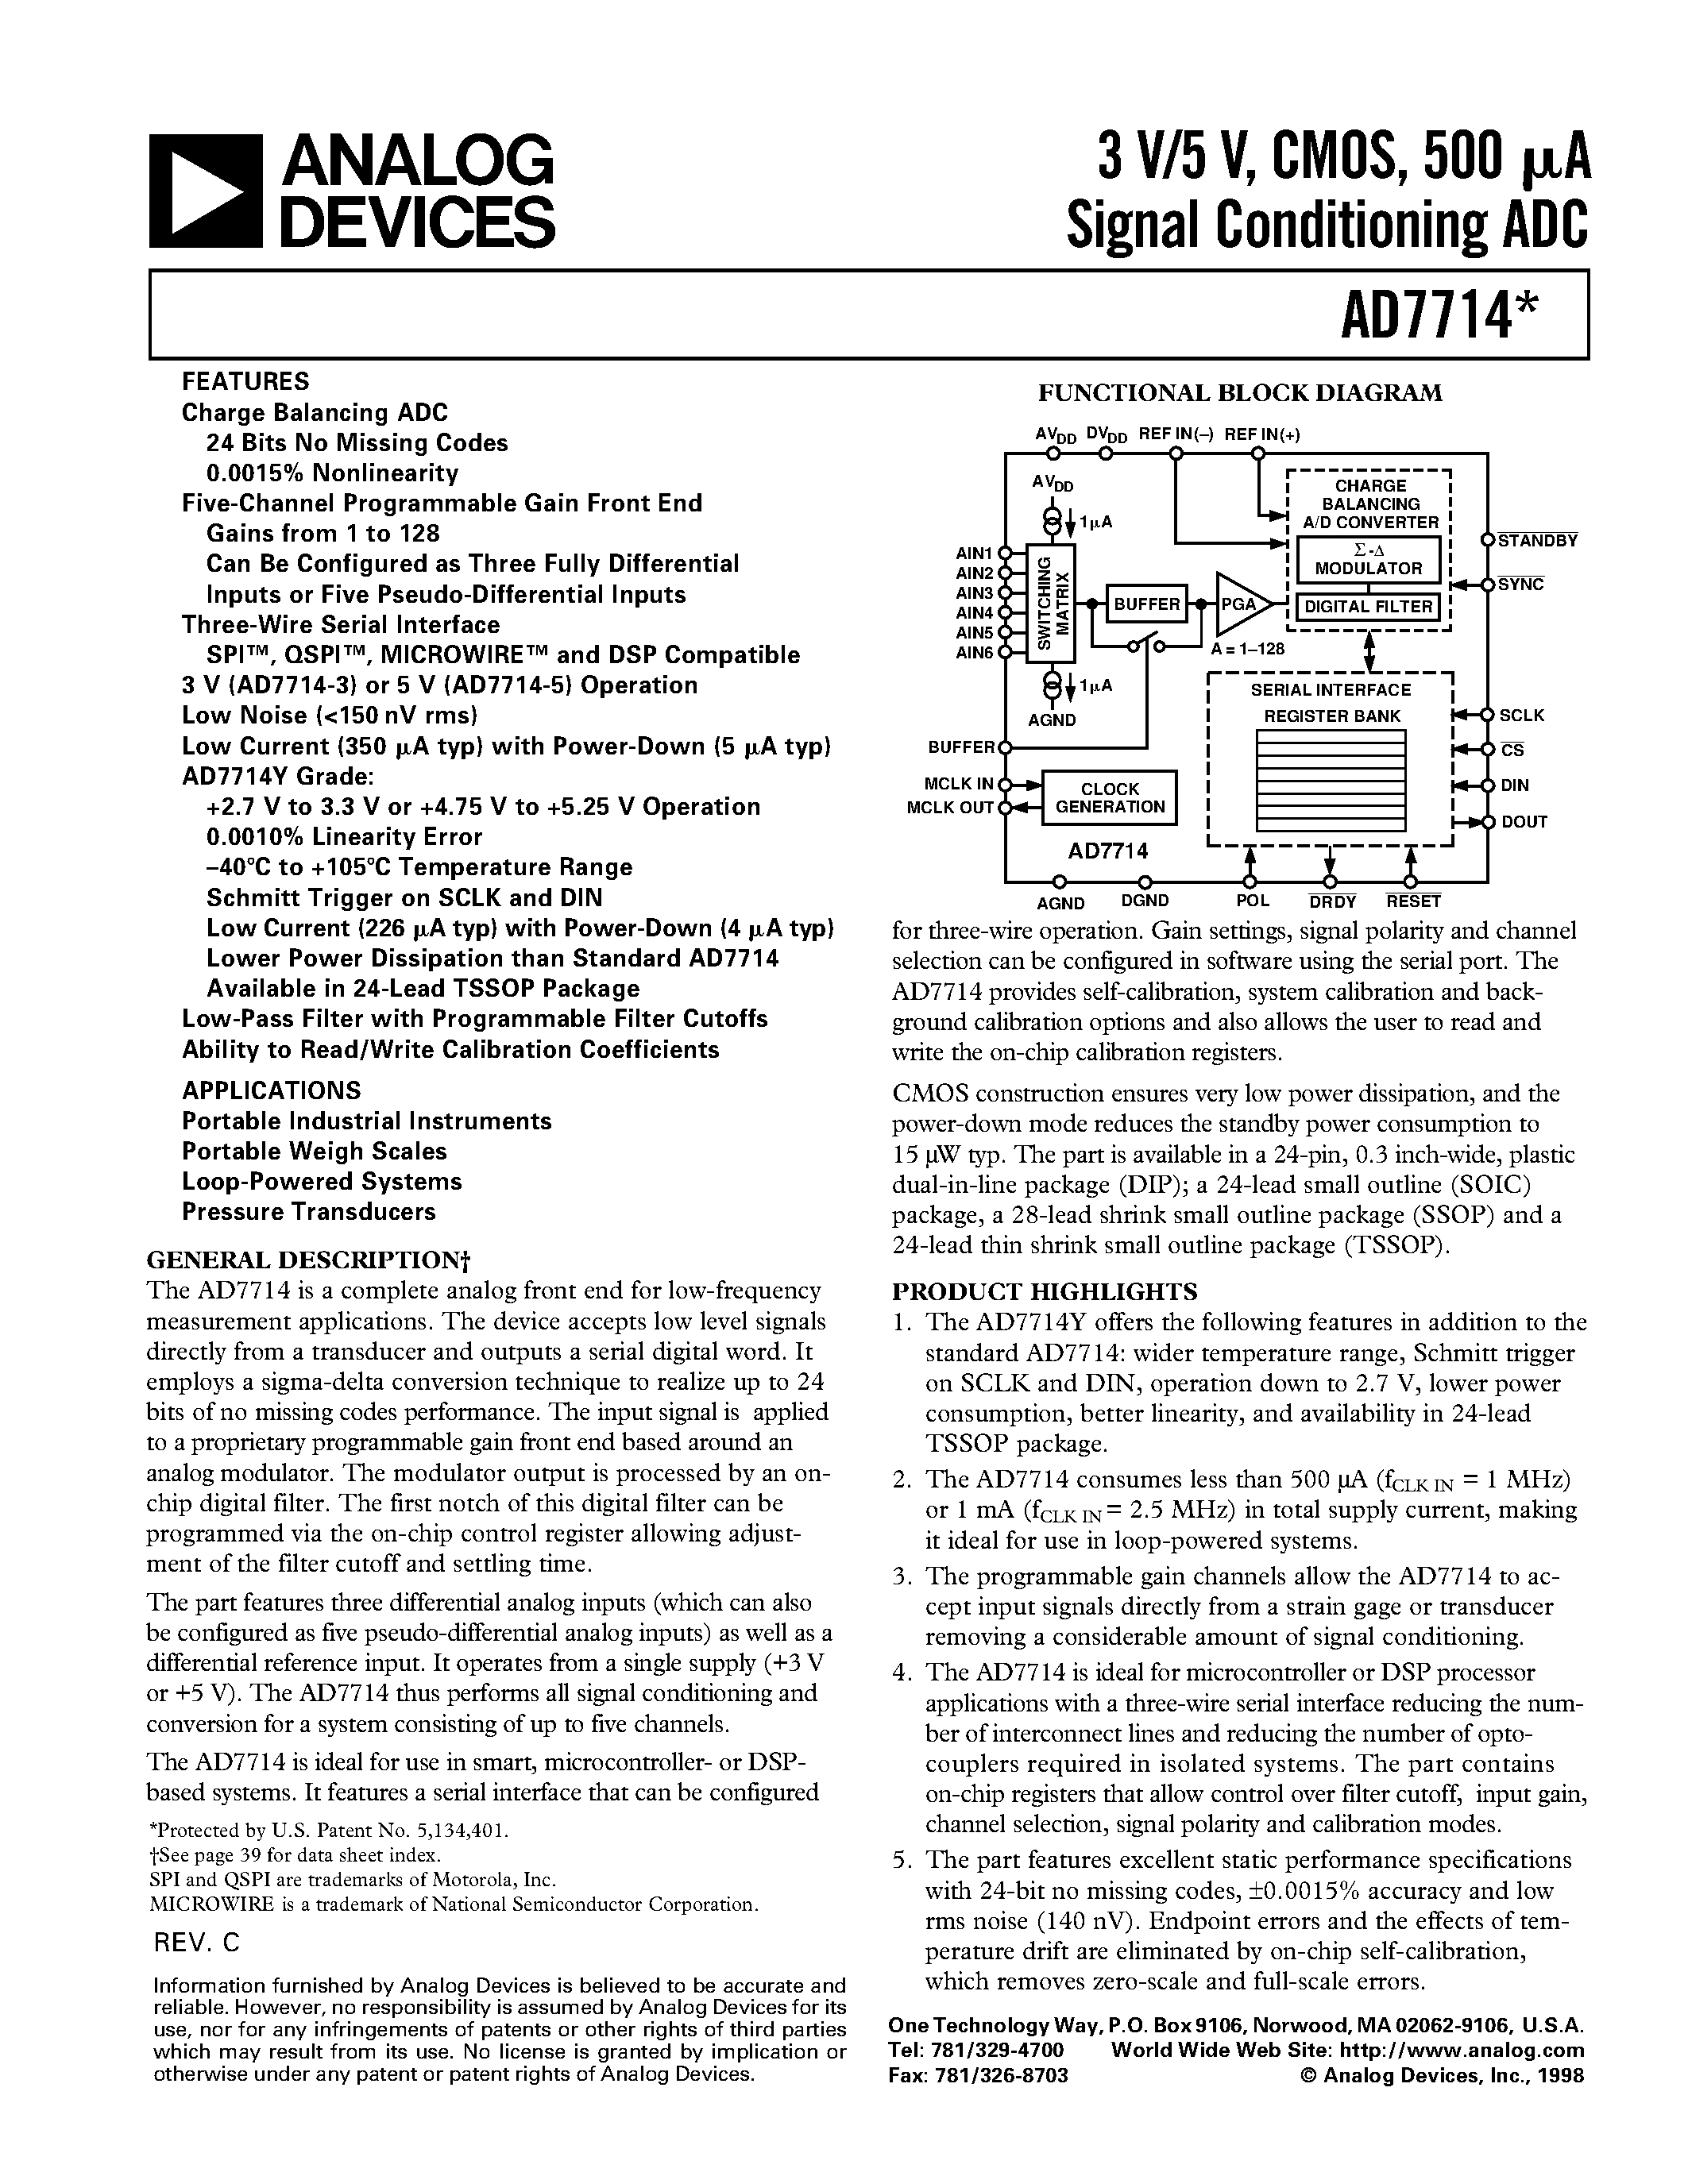 Datasheet AD7714AChips-5 - 3 V/5 V/ CMOS/ 500 uA Signal Conditioning ADC page 1